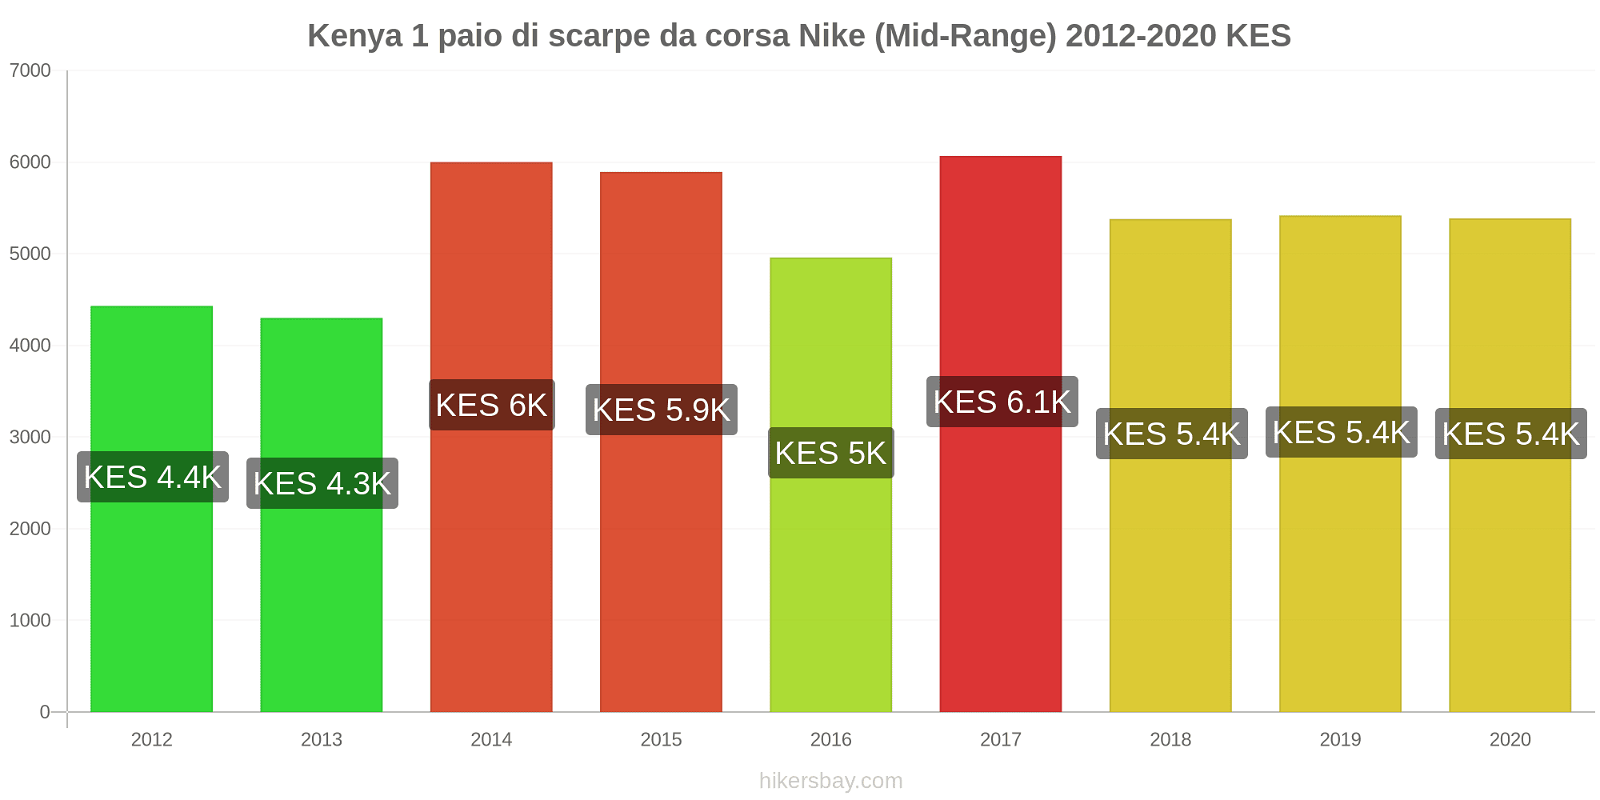 Kenya variazioni di prezzo 1 paio di scarpe da corsa Nike (simile) hikersbay.com